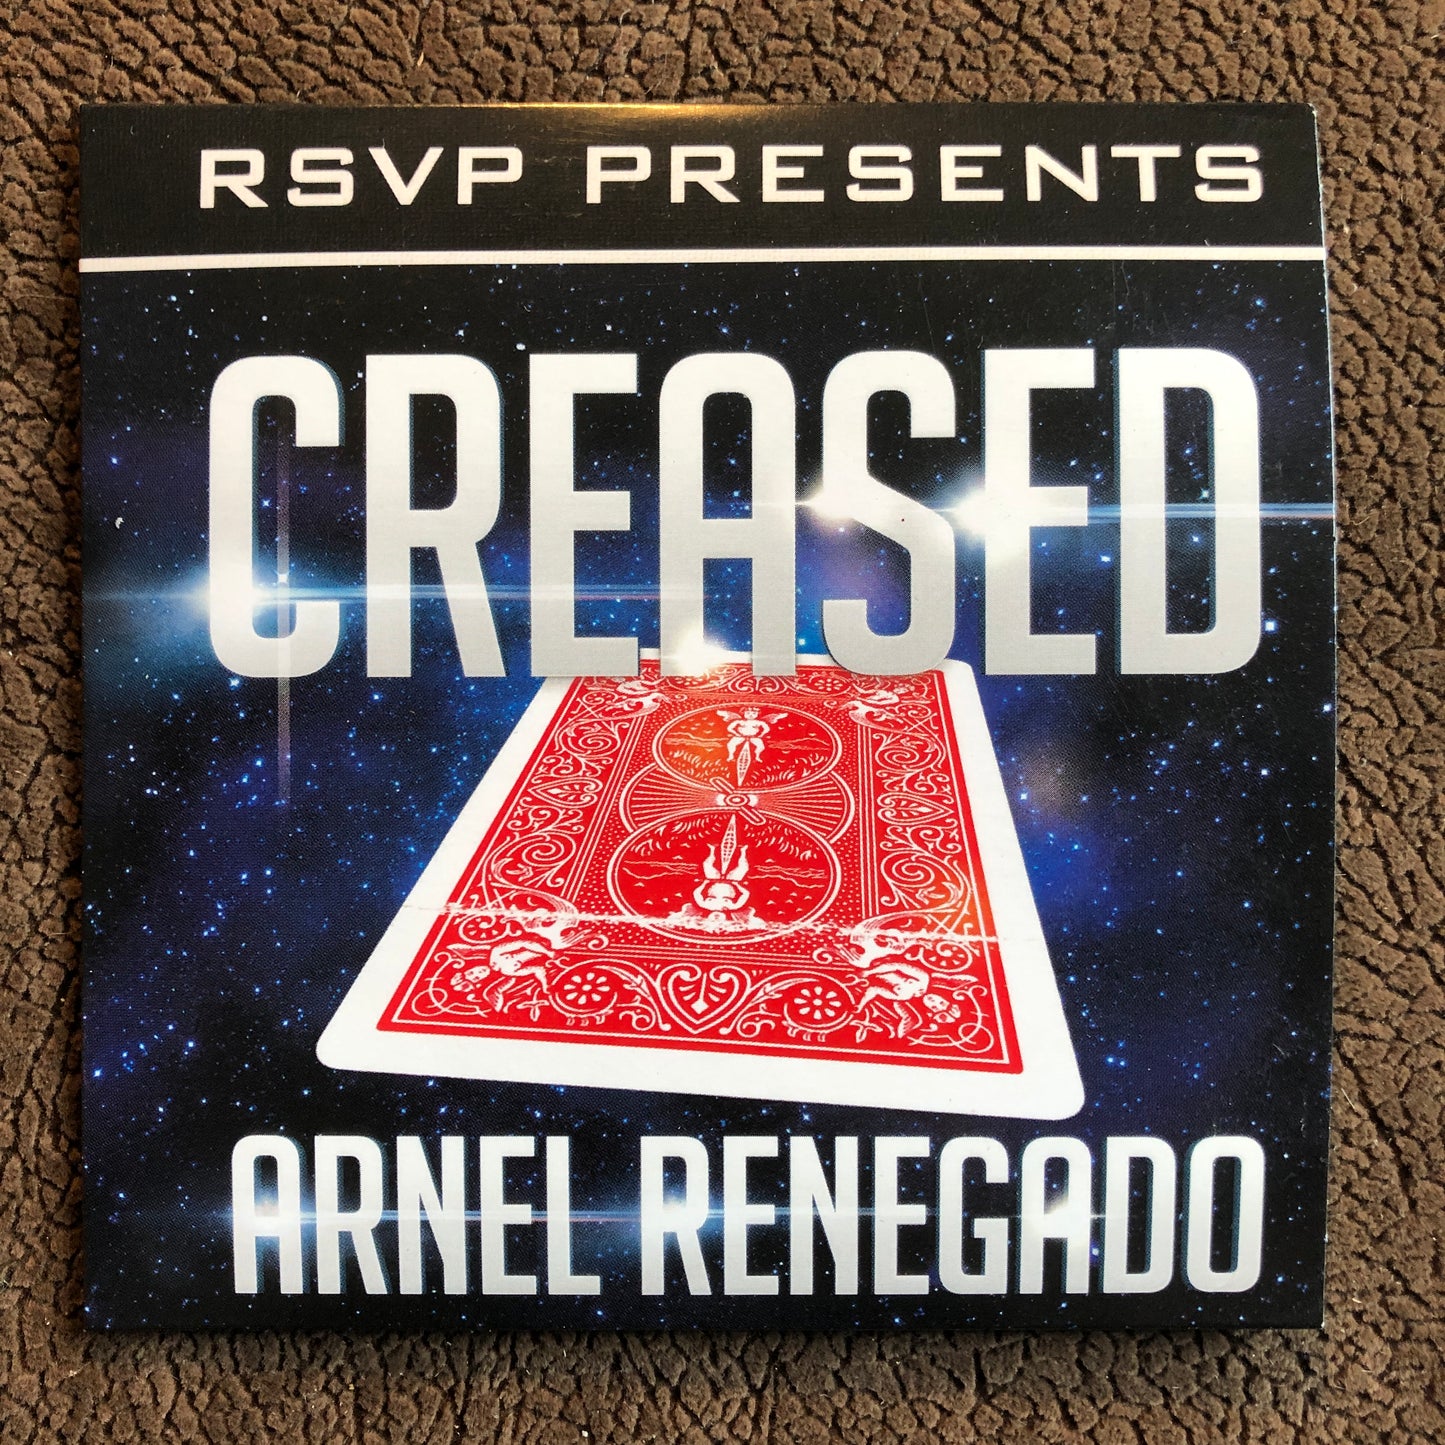 Creased - Arnel Renegado